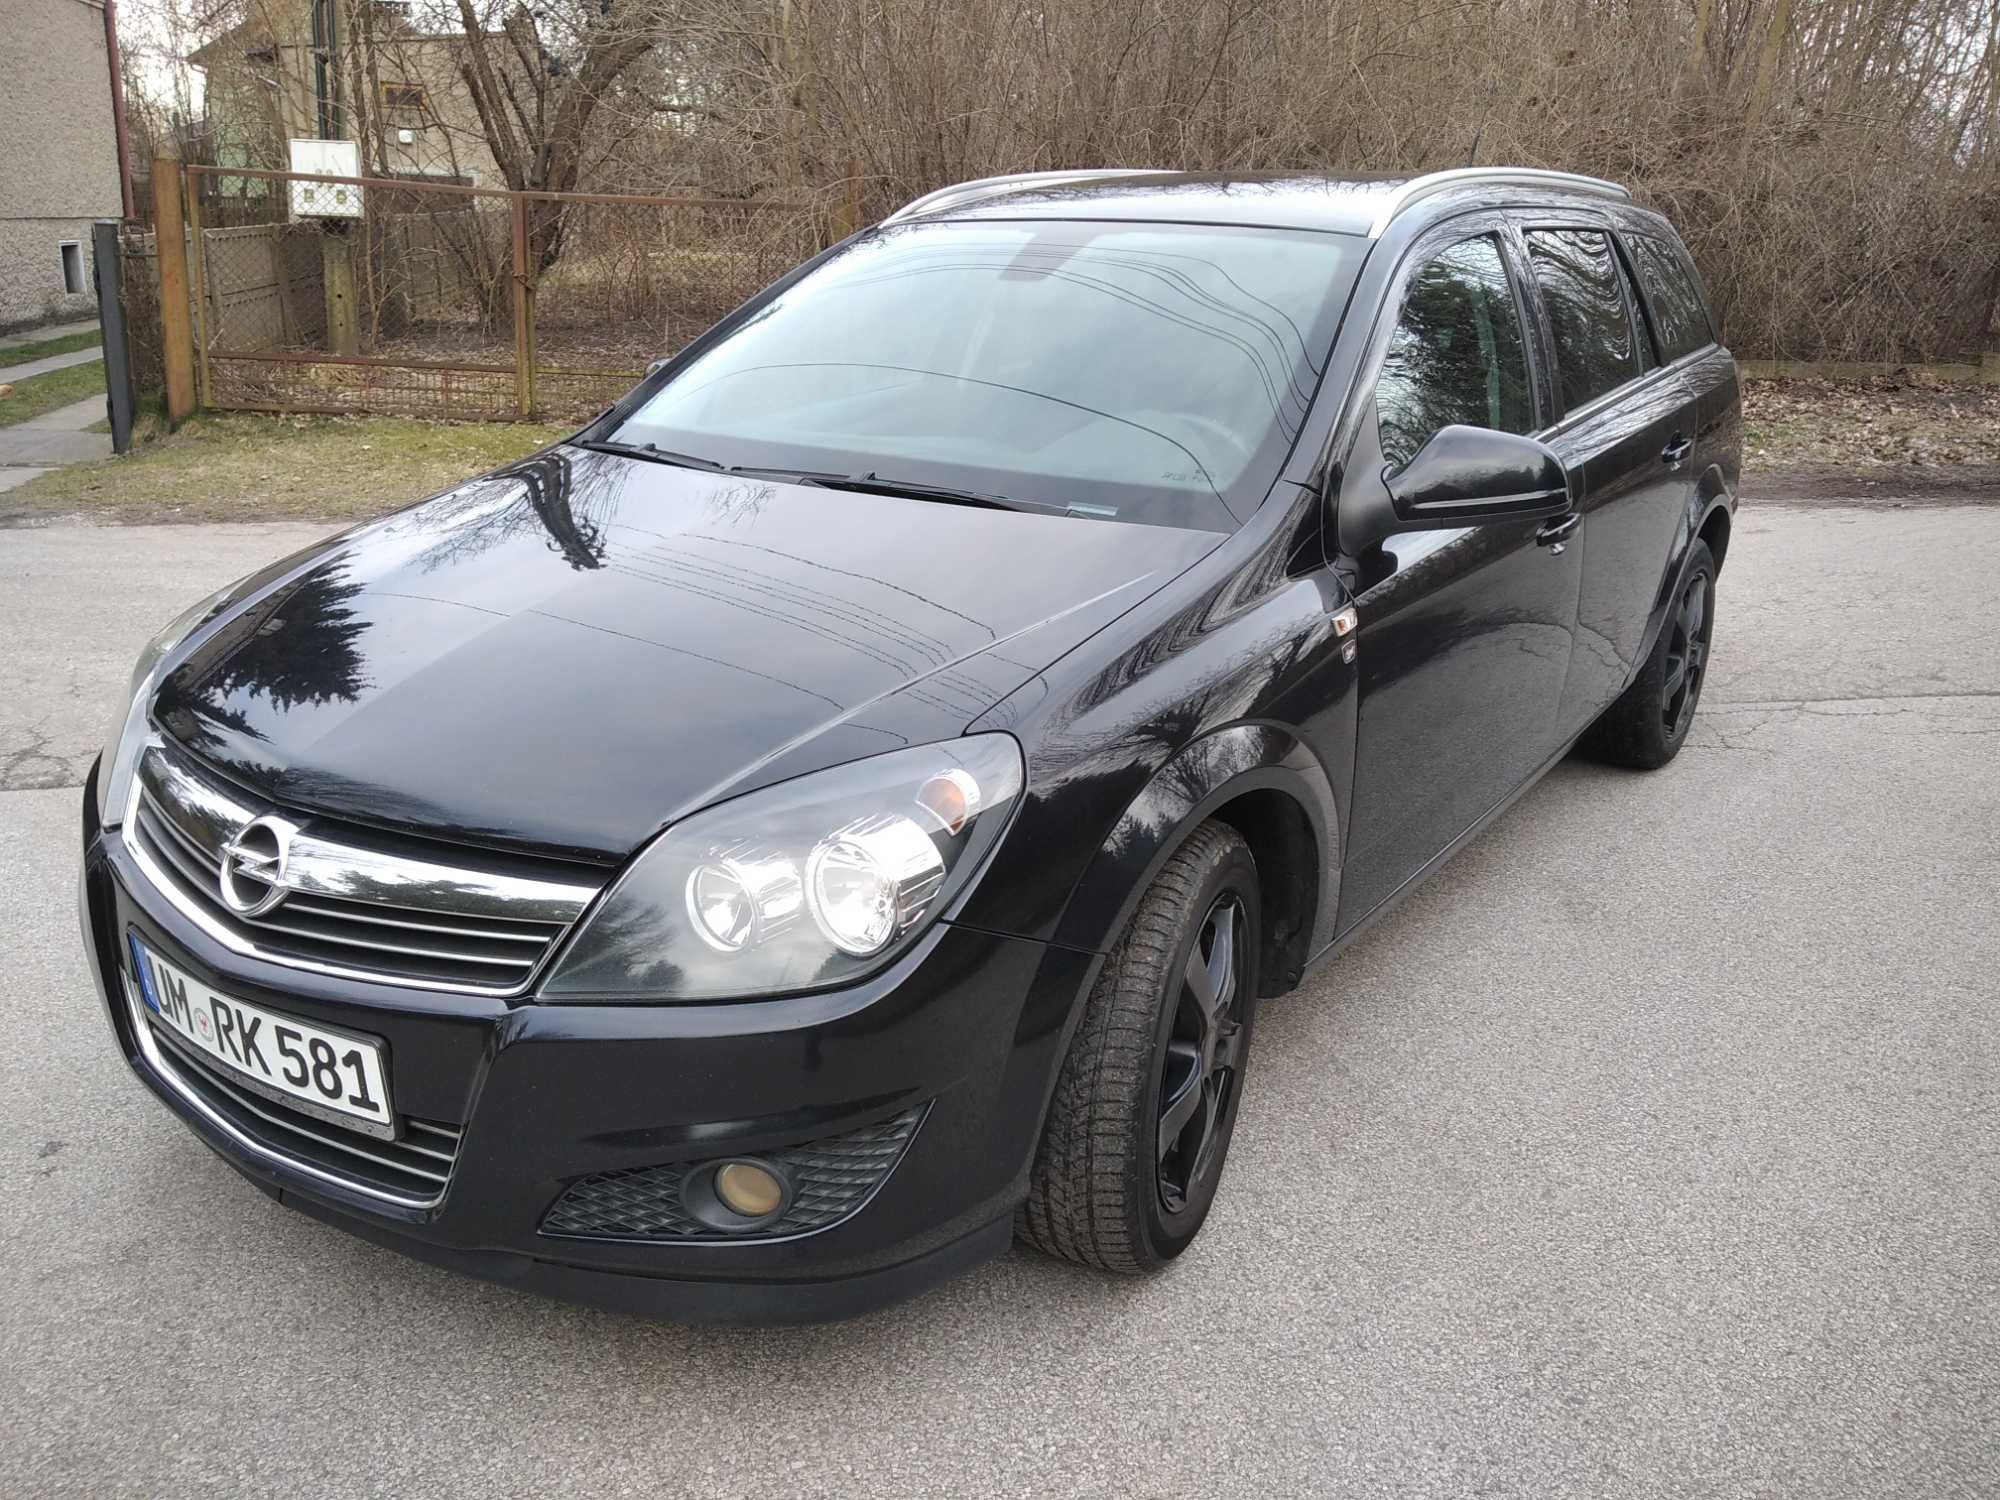 Opel Astra 1.9 CDTI 2010